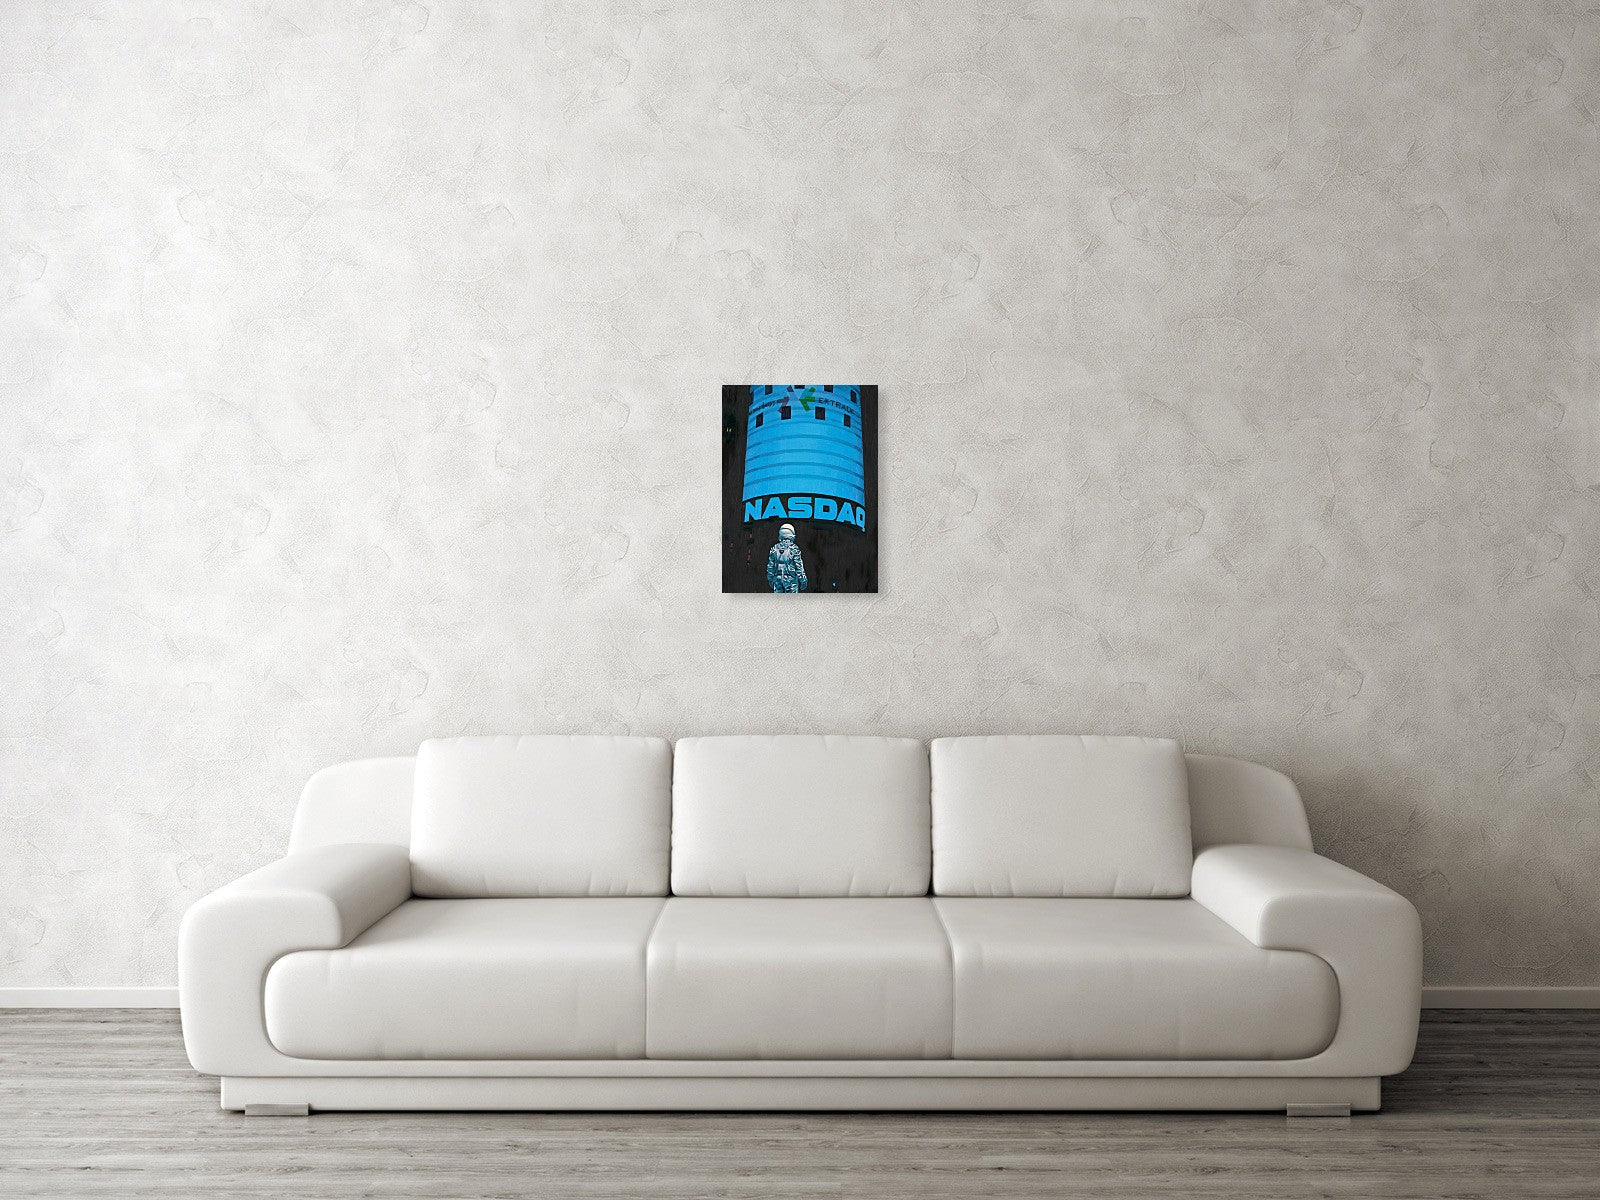 Nasdaq Art Print Canvas And Poster, Warm Home Decor Wall Art Visual Art 1617268380306.jpg